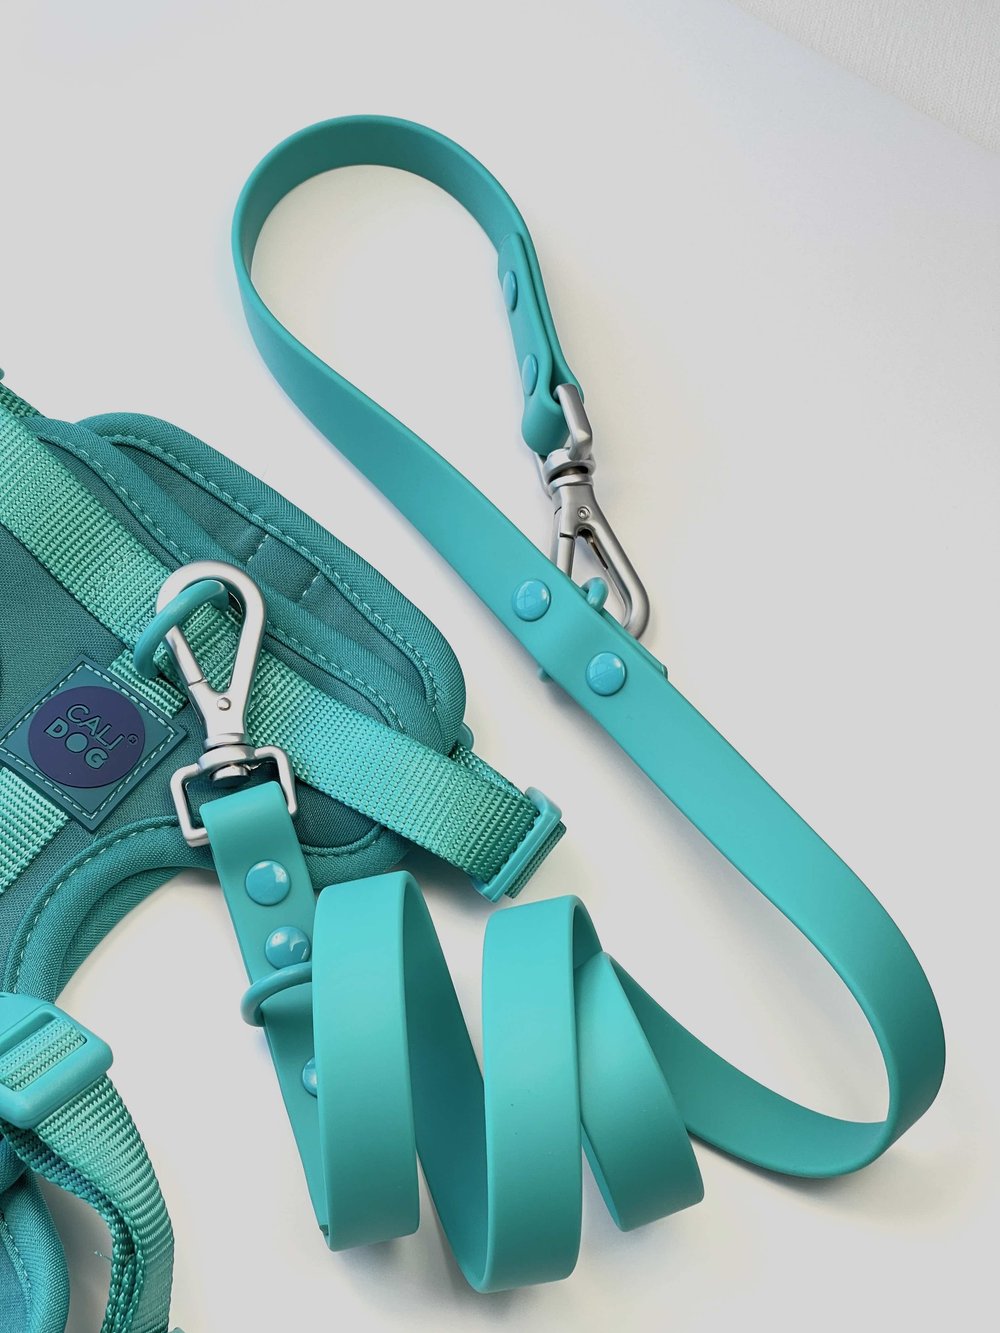 Cotton Dog Harness and Leash Set — CALIDOG